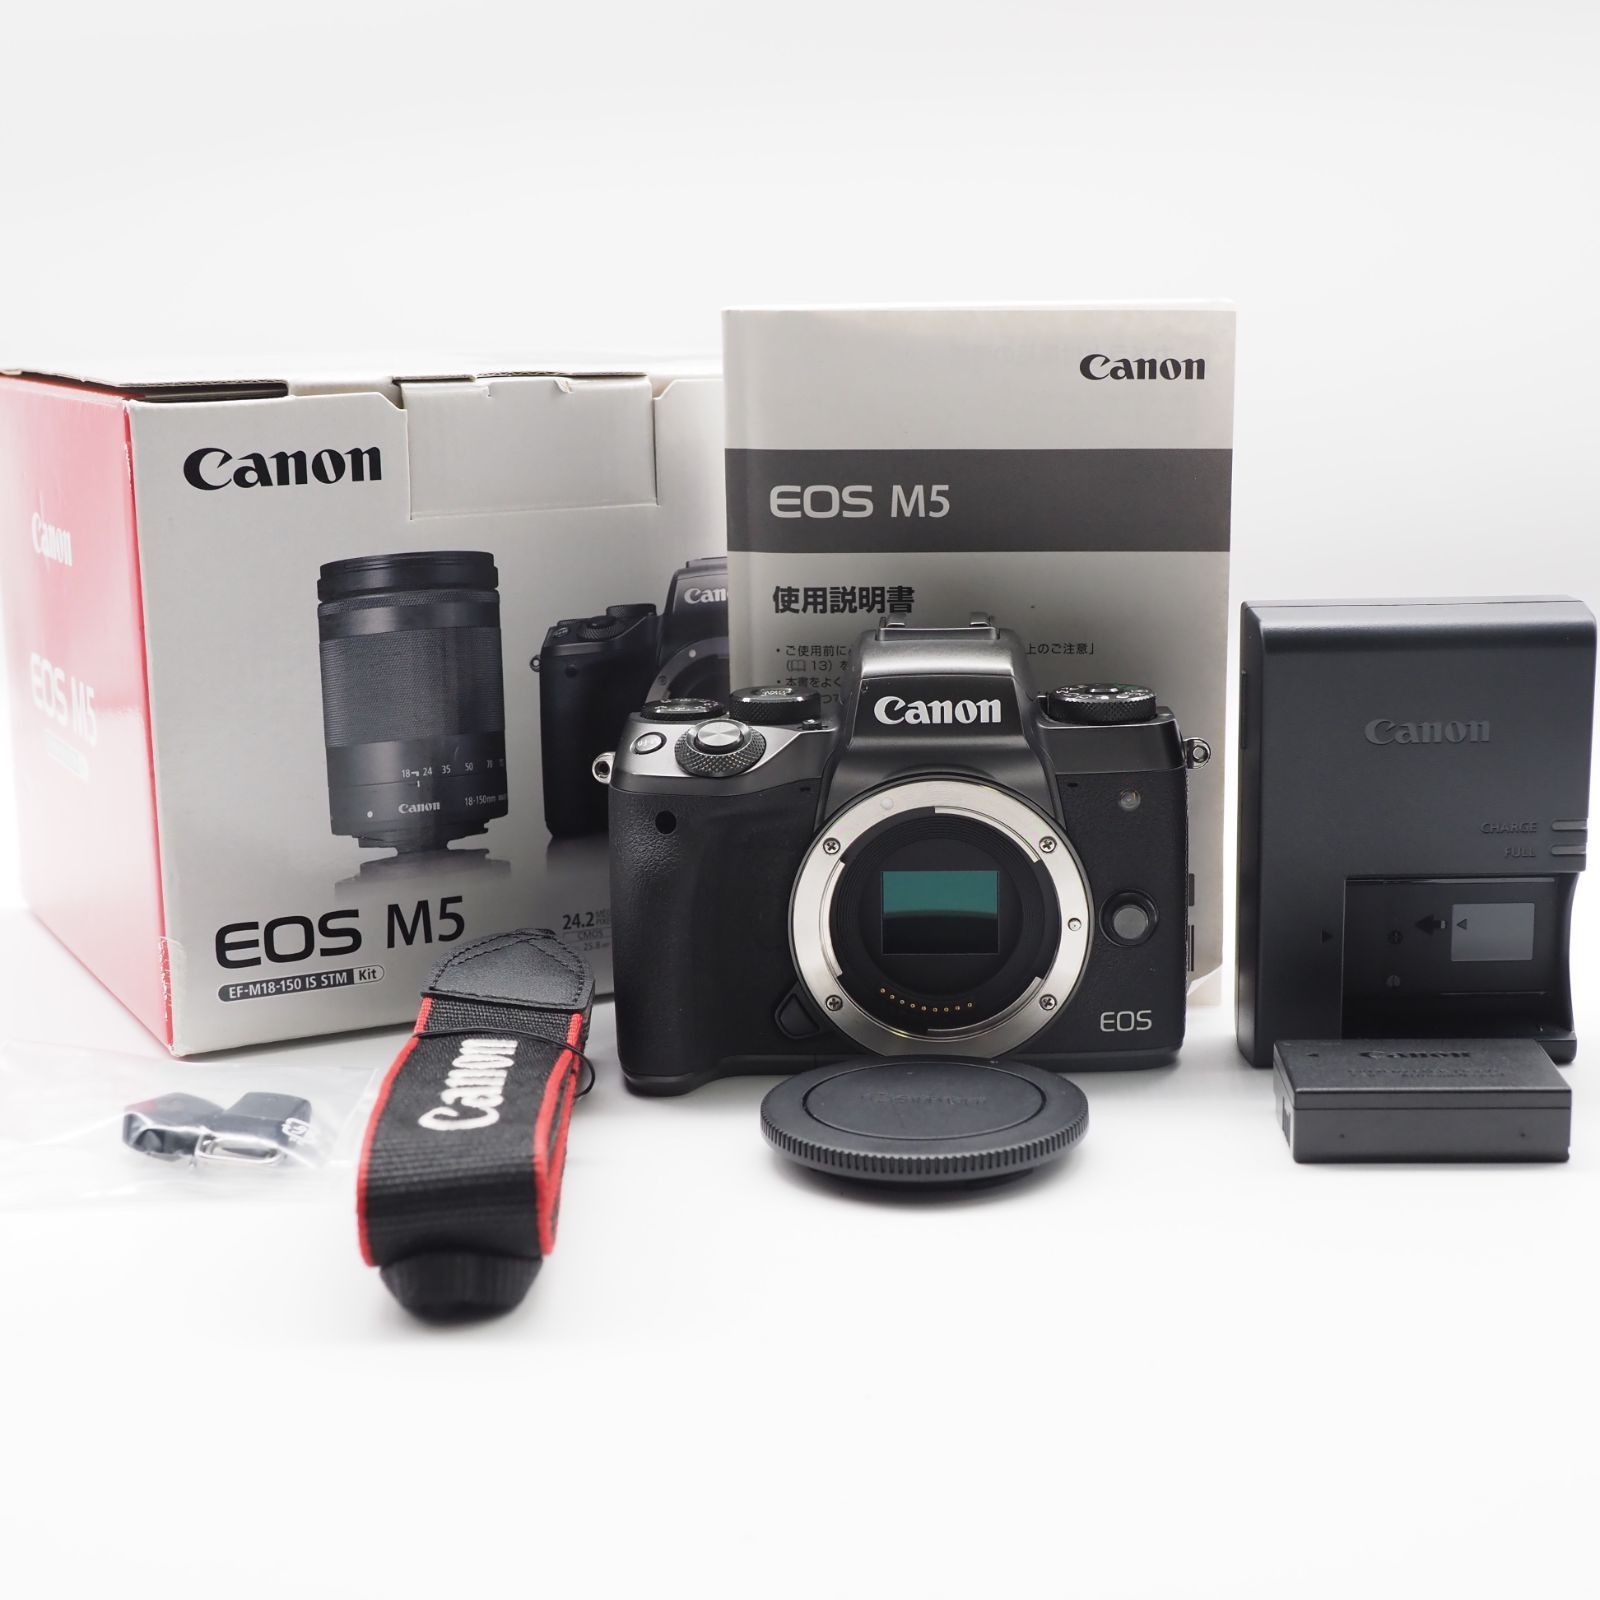 Canon ミラーレス一眼カメラ EOS M5 ボディー EOSM5-BODY #2544